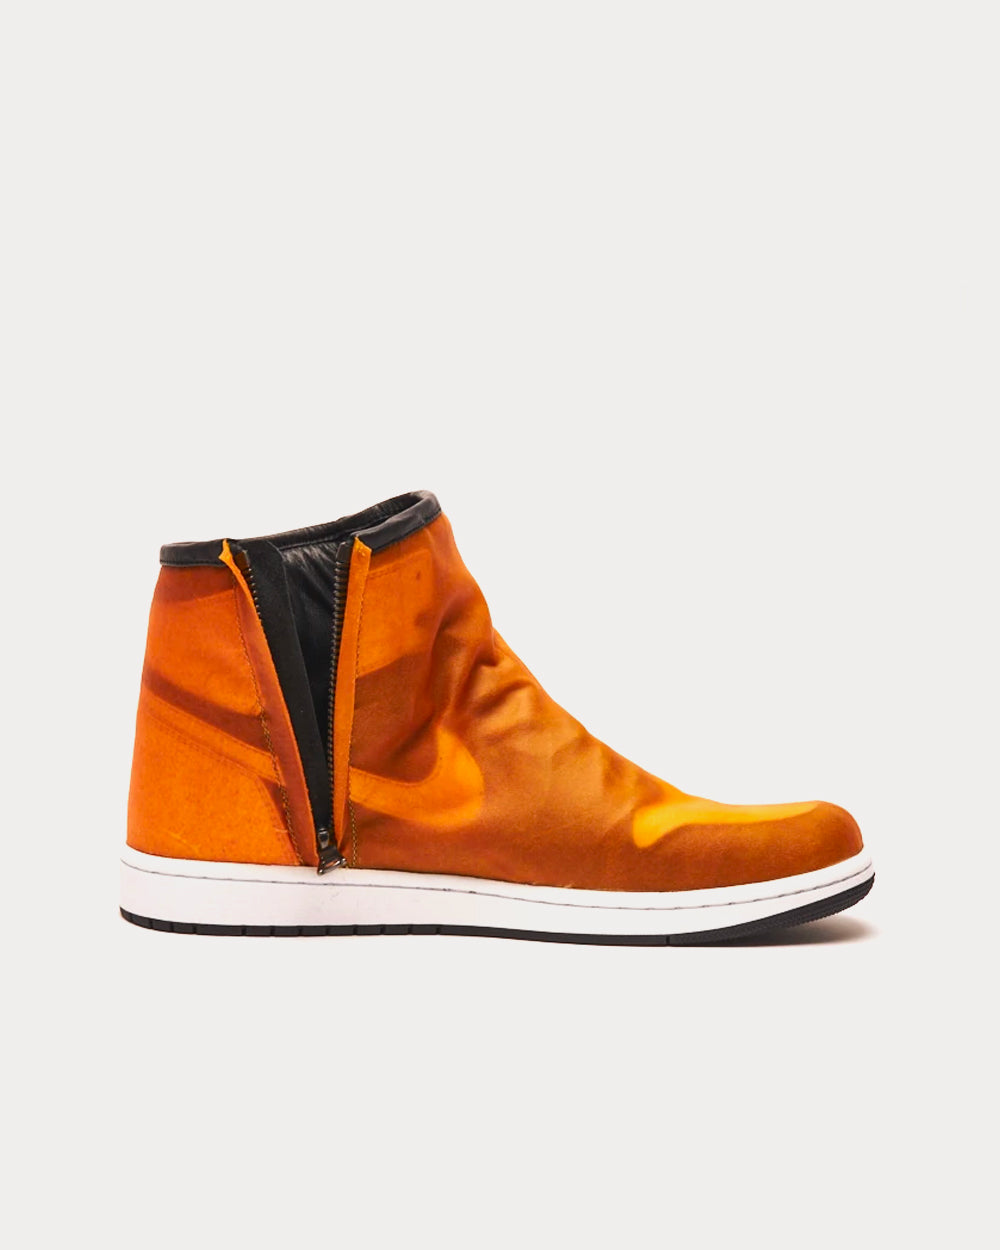 The Shoe Surgeon - J1 Orange Apparition High Top Sneakers